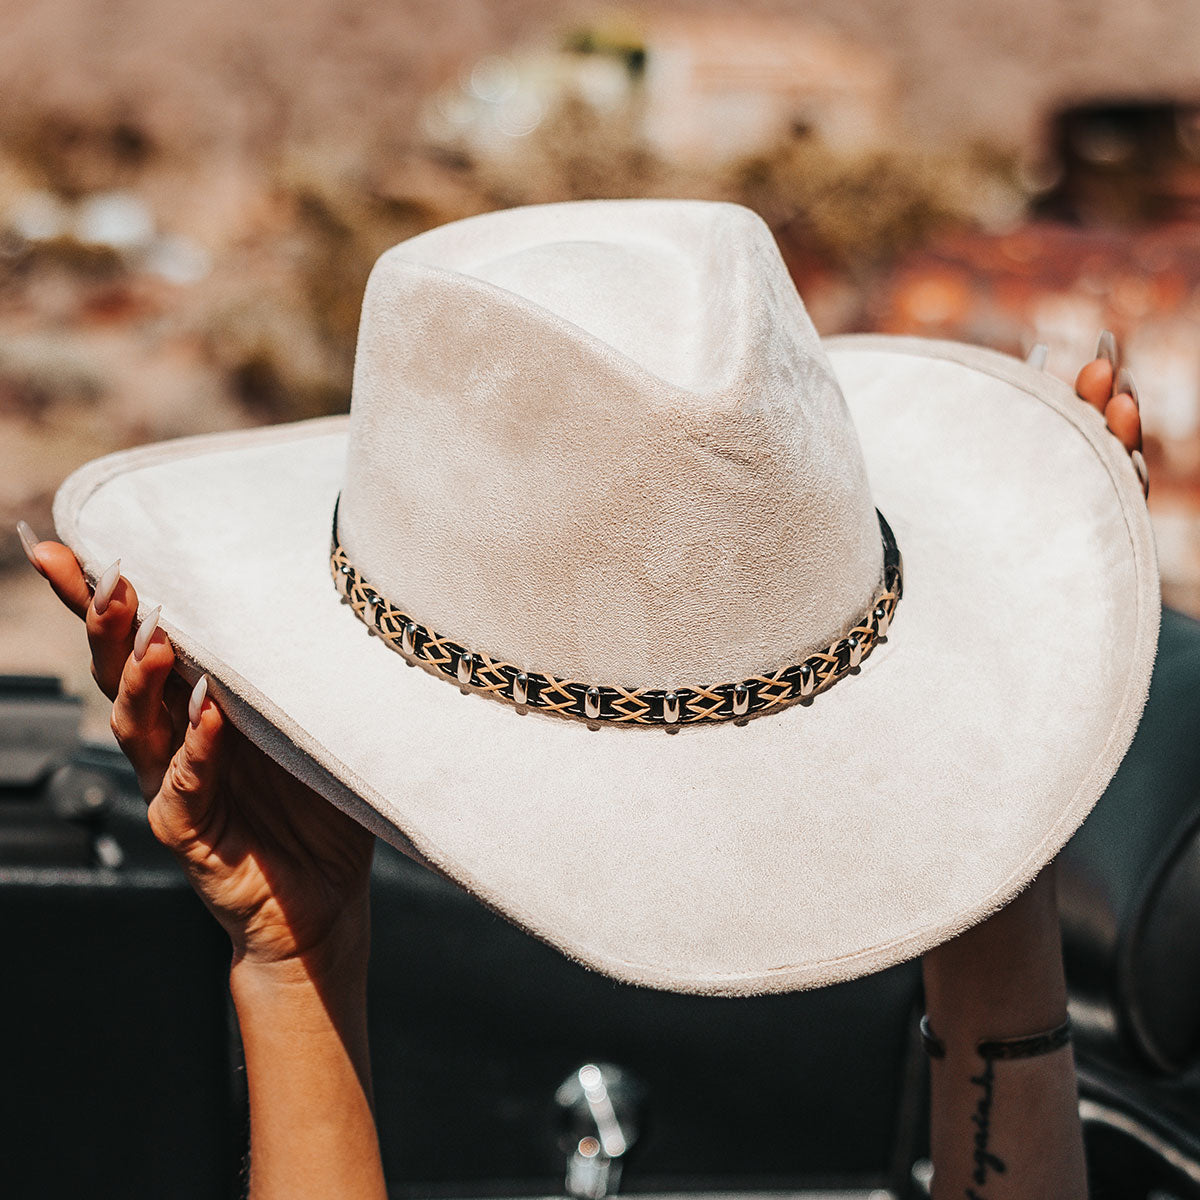 FREEBIRD Jones beige western cowboy hat featuring teardrop crown, upturned-brim, and braided leather band lifestyle